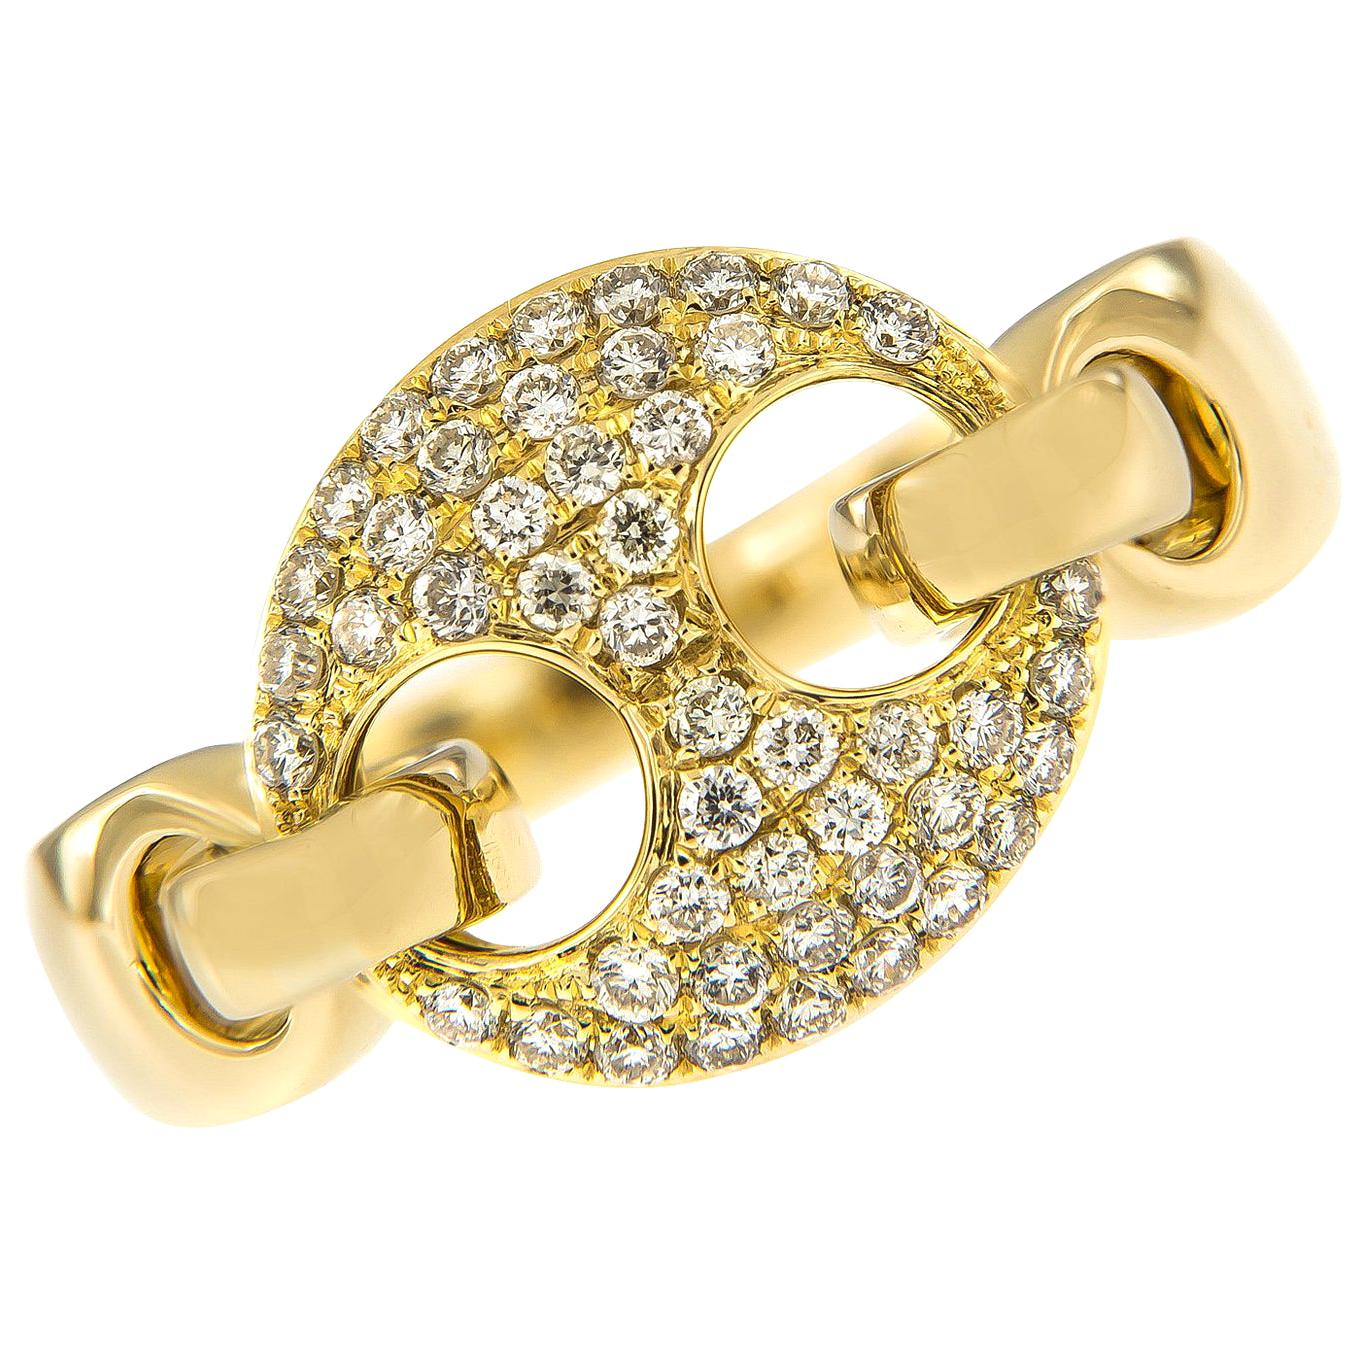 Gucci Style Link 18 Karat Yellow Gold and Diamond Fashion Ring